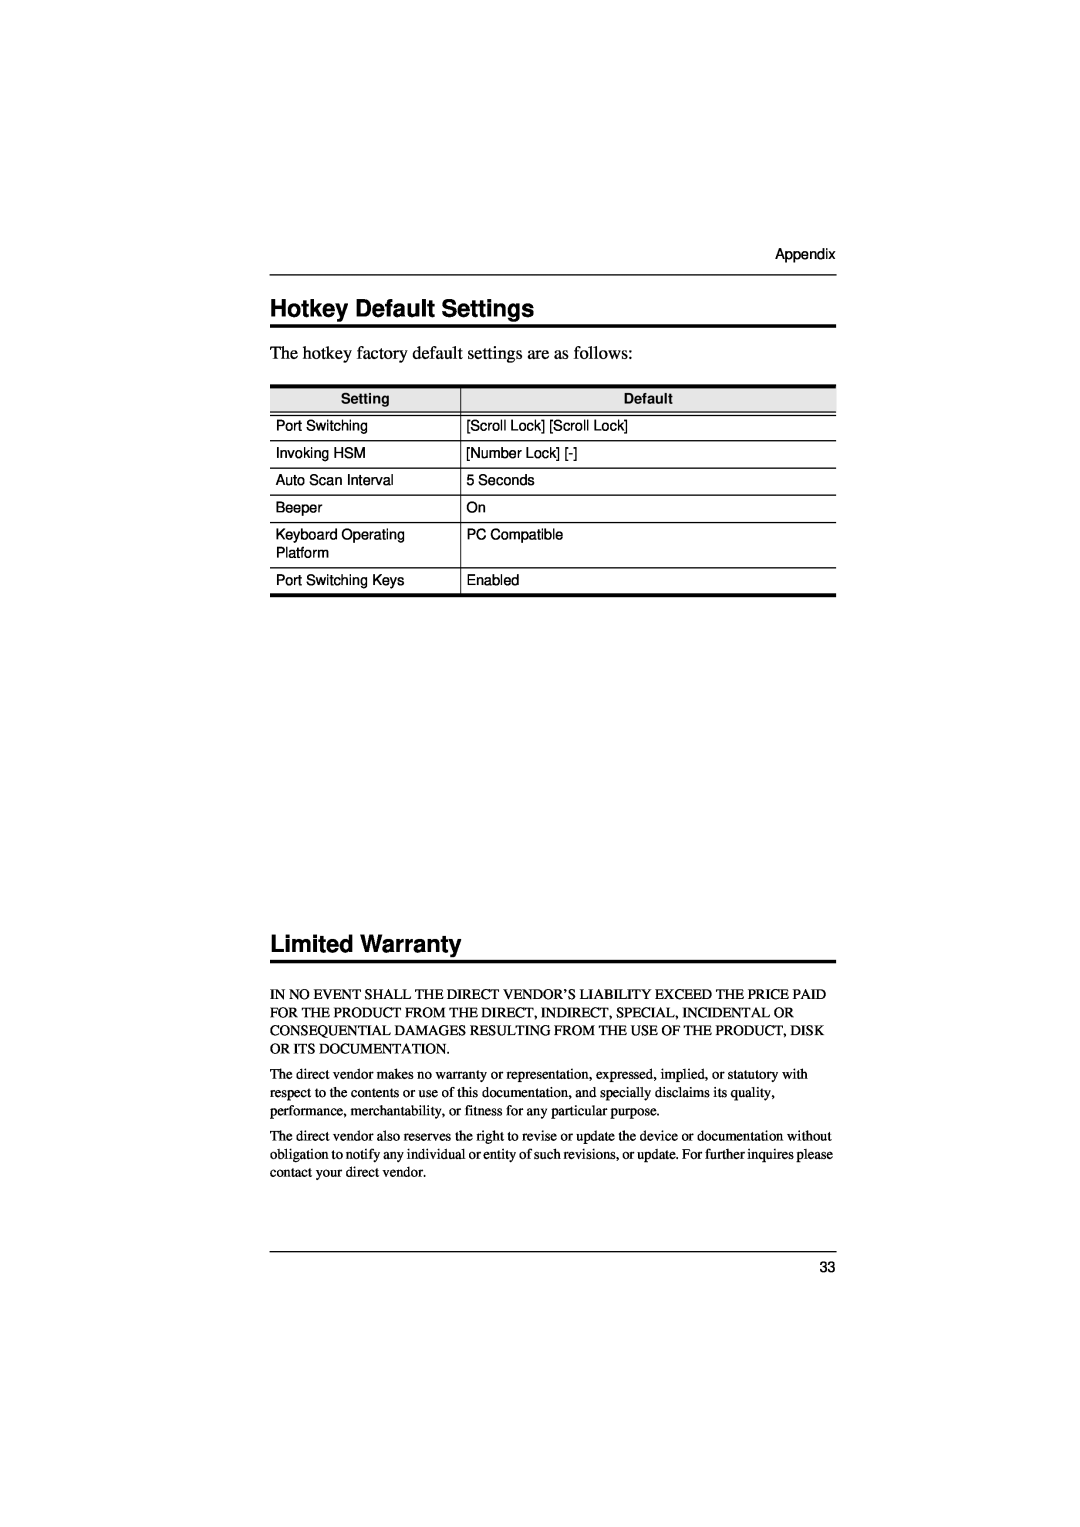 ATEN Technology CS-1762 Hotkey Default Settings, Limited Warranty, The hotkey factory default settings are as follows 